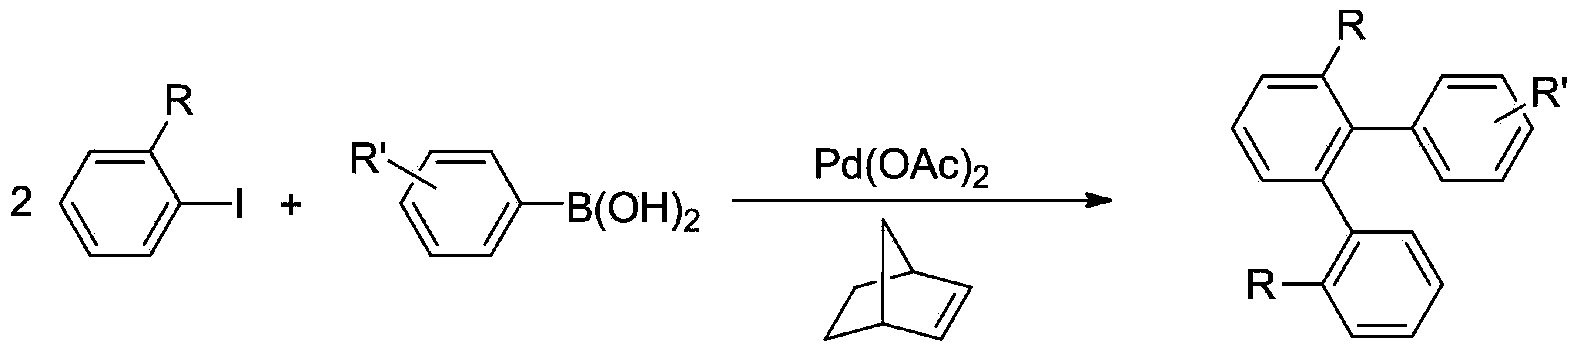 Method for synthetizing terphenyl compounds through palladium catalyzed cascade reaction